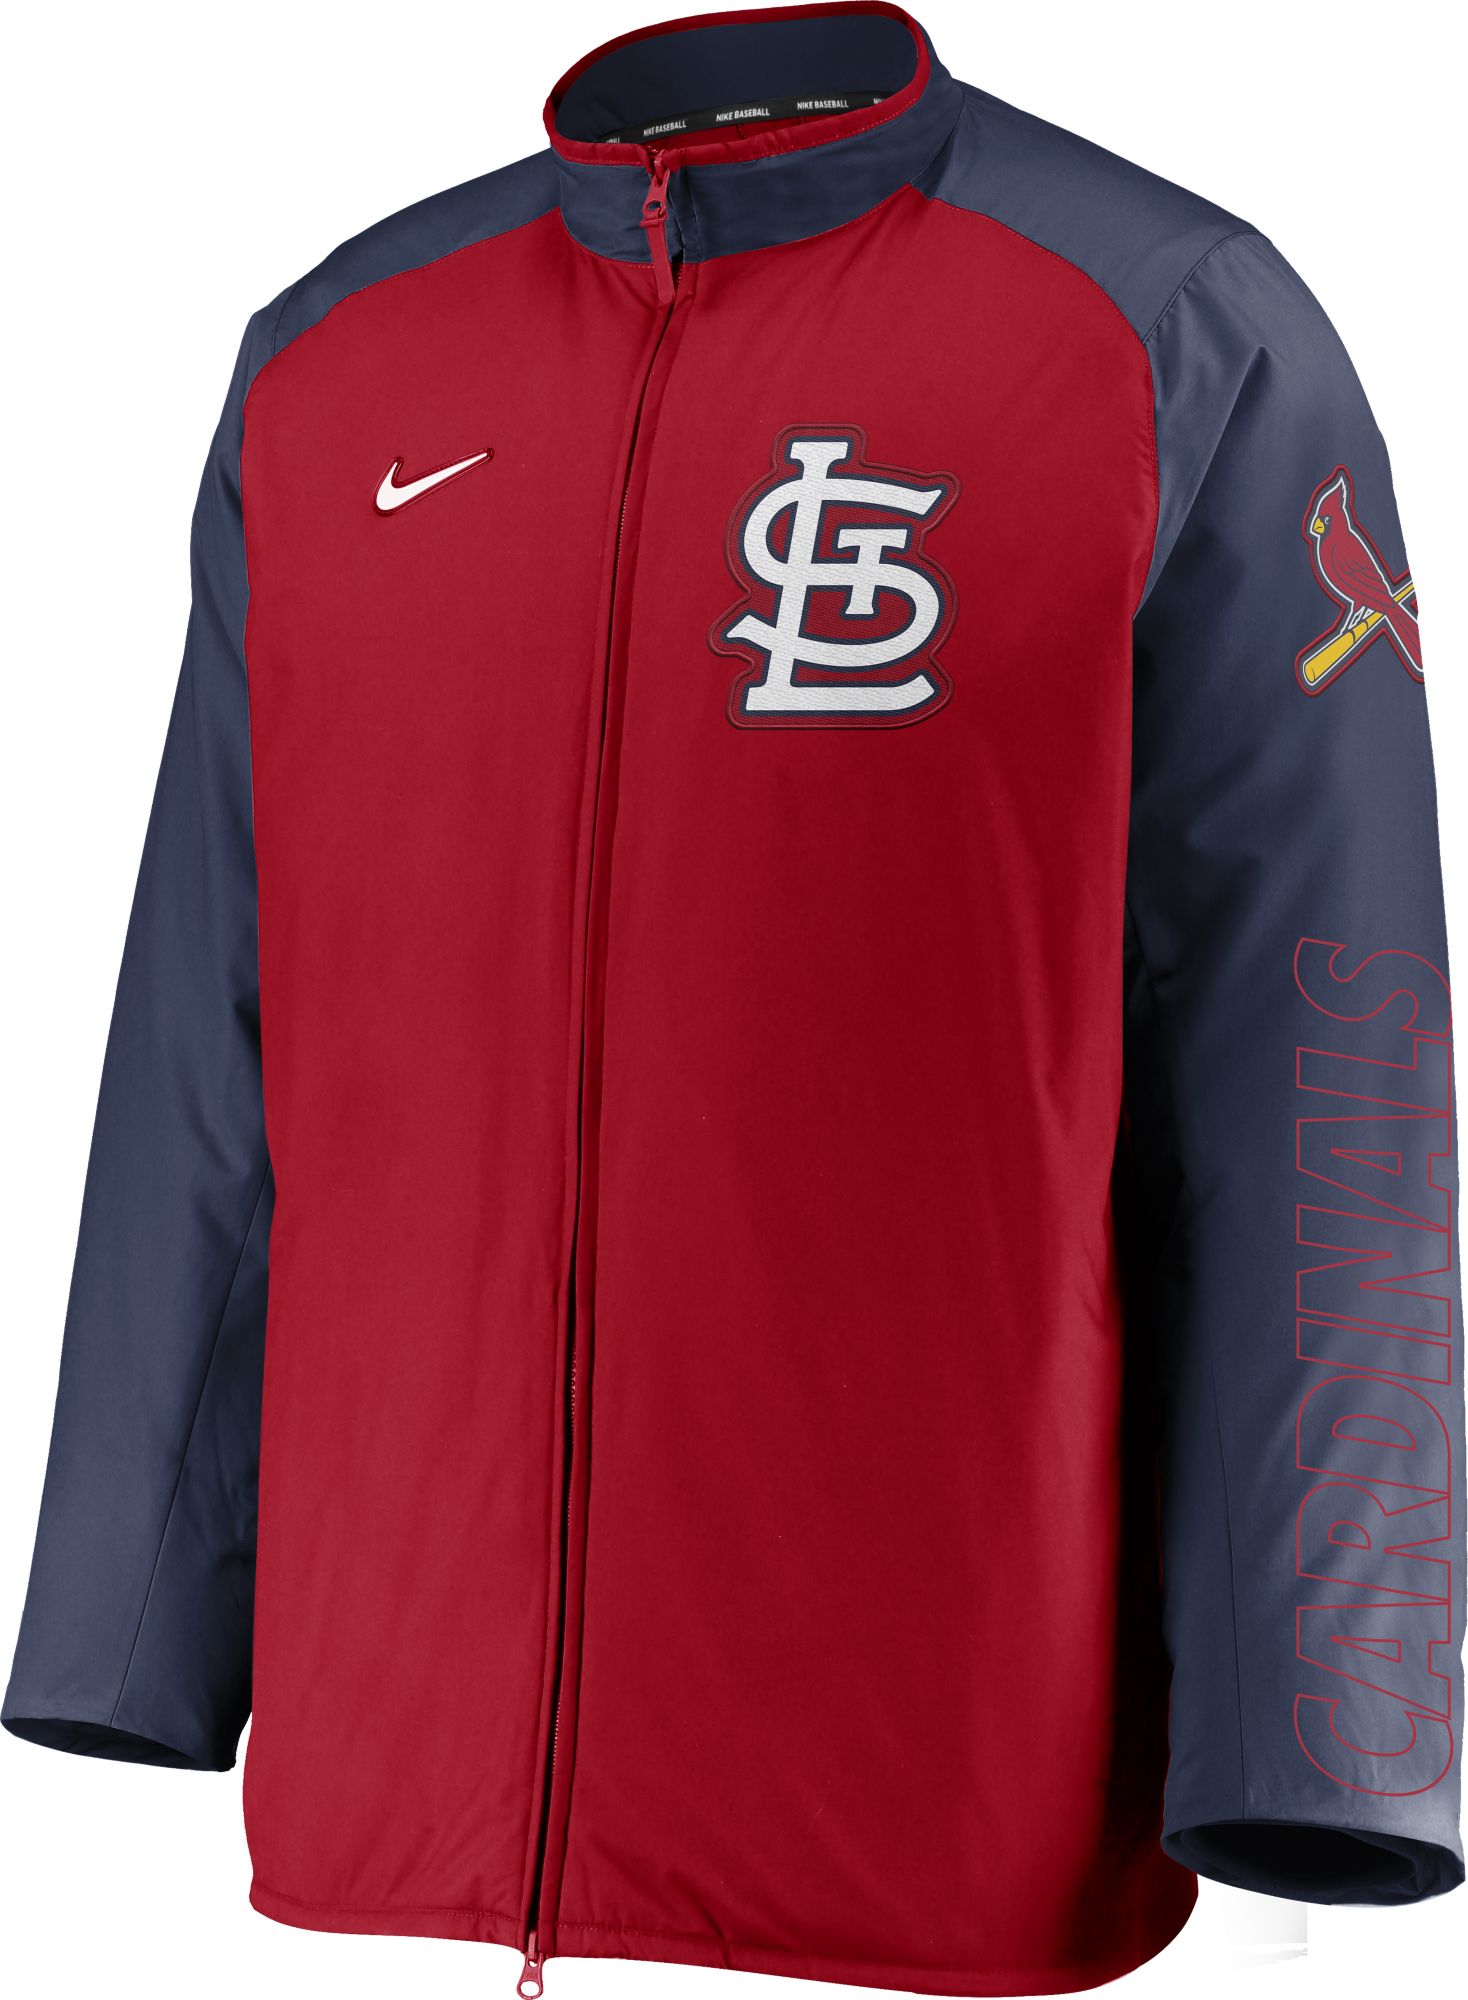 St Louis Cardinals Jacket 